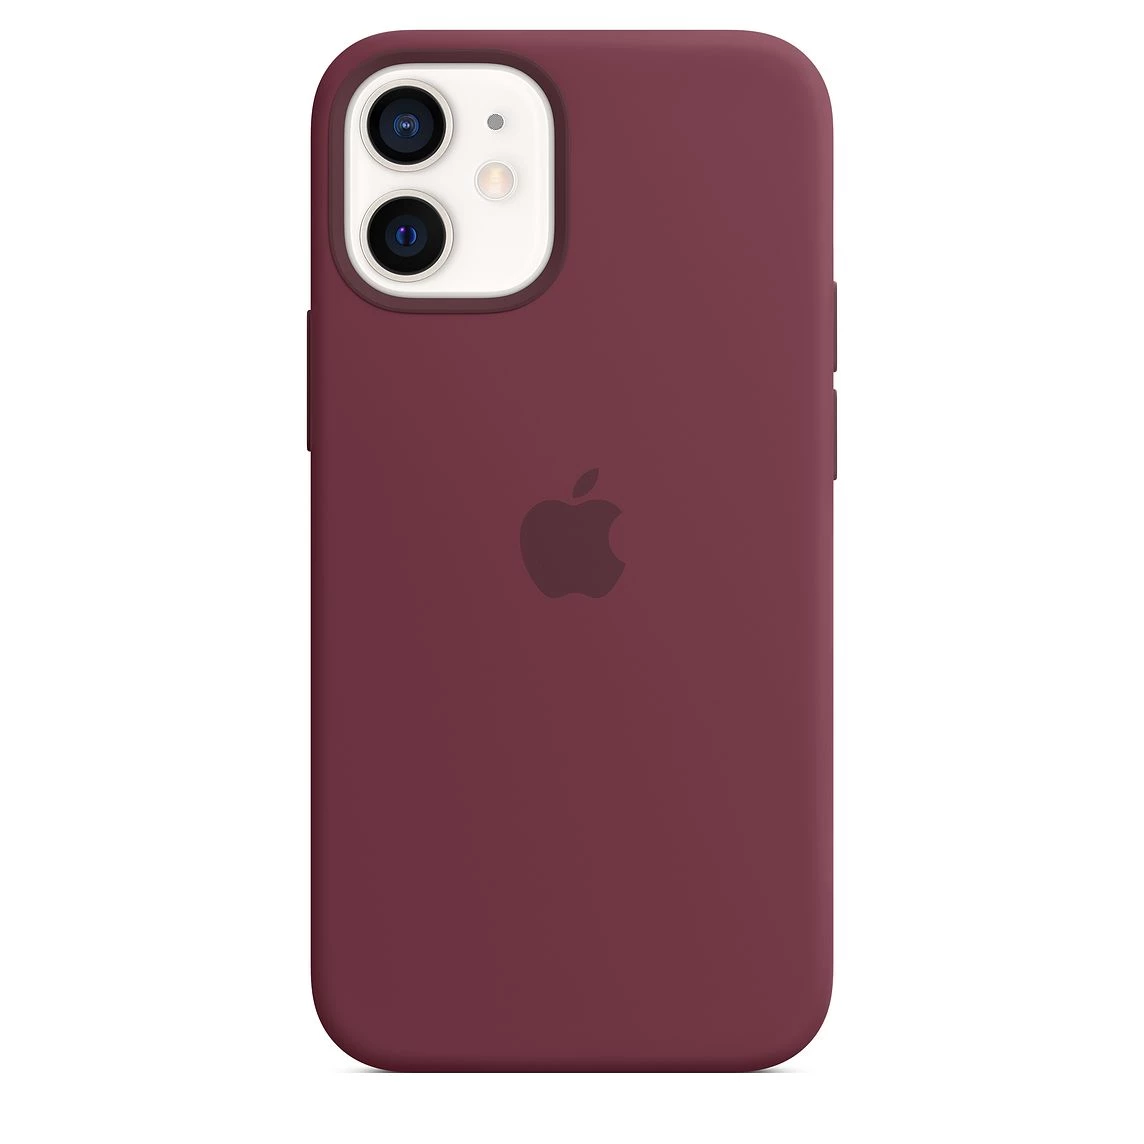 Apple iPhone 12 mini Silicone Case with MagSafe - Plum (MHKQ3)